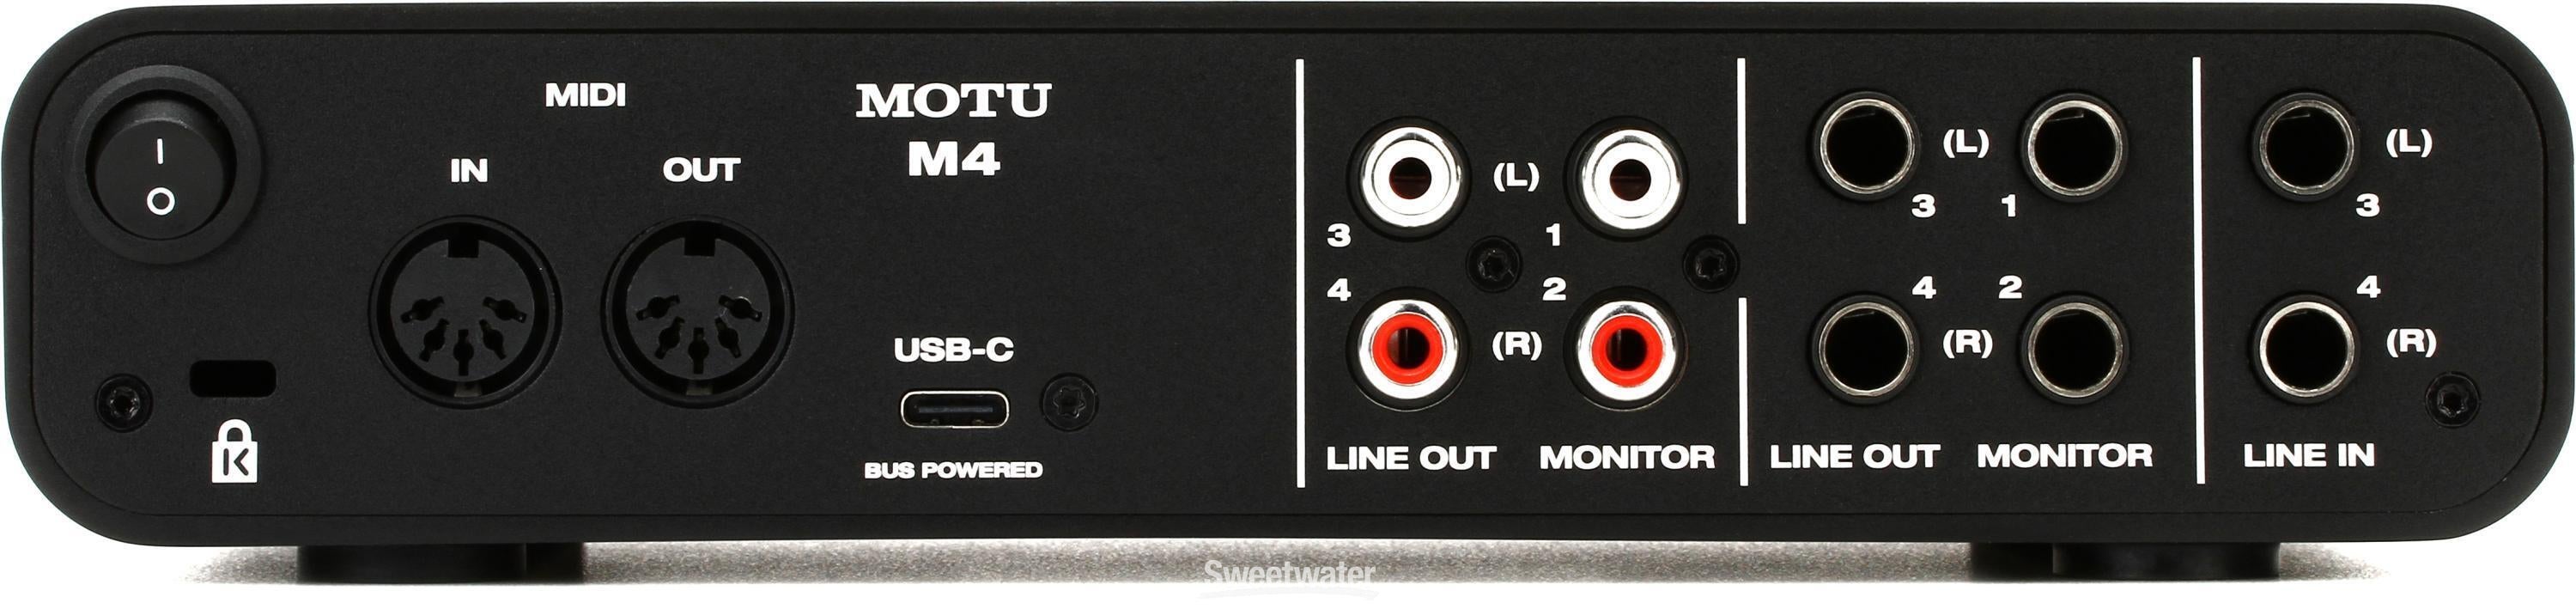 MOTU M4 4x4 USB C Audio Interface   Sweetwater